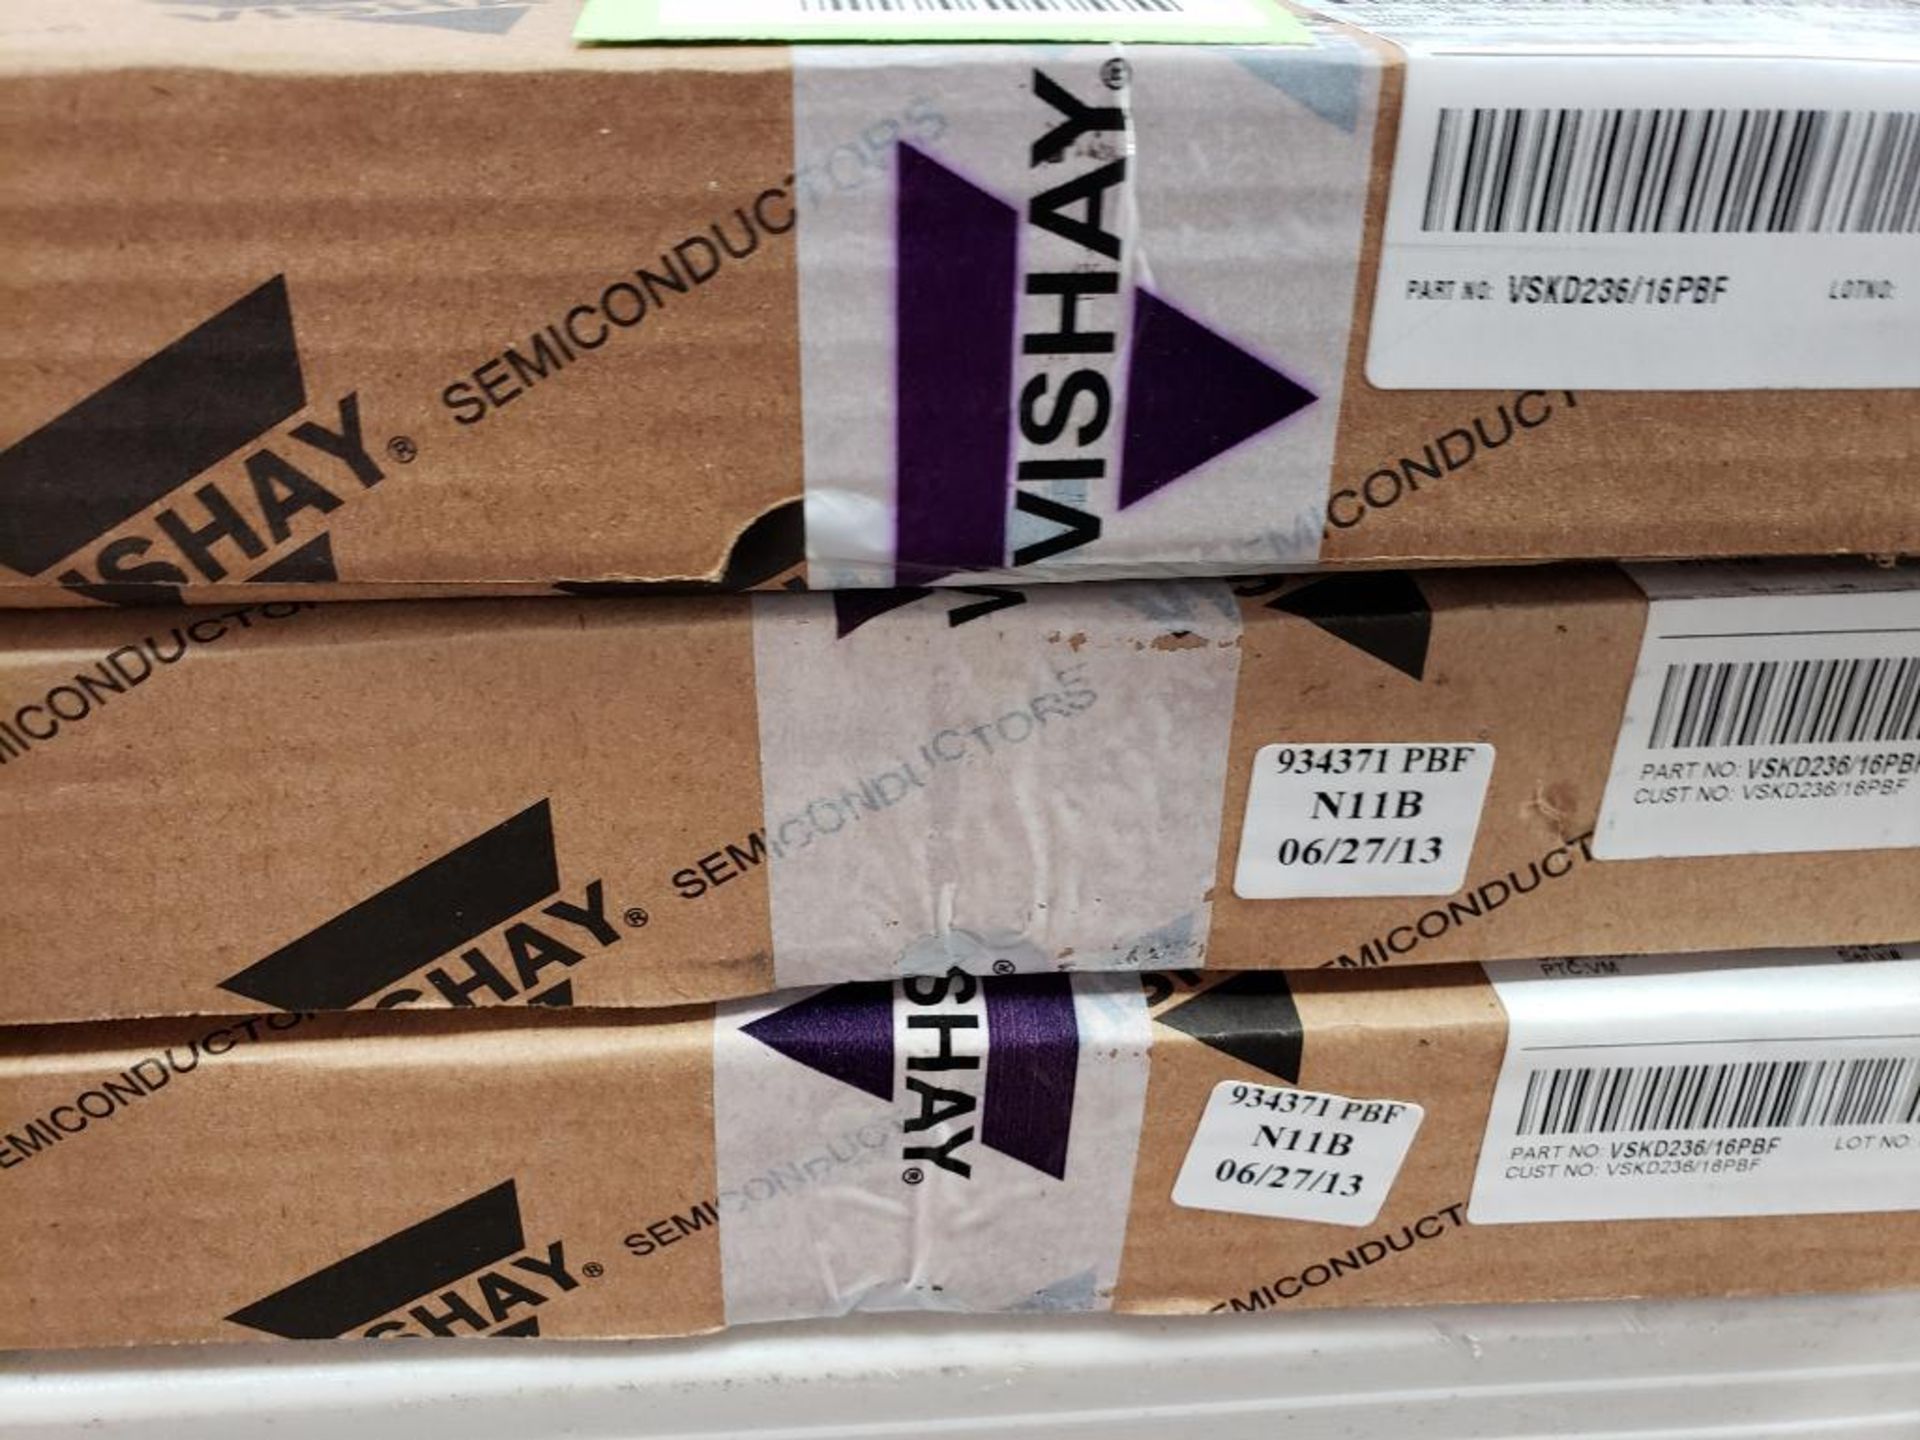 Qty 45 - Vishay semiconductor units. Part number VSKD236/16PBF. Boxed 15 per box bulk. New in box. - Image 2 of 3